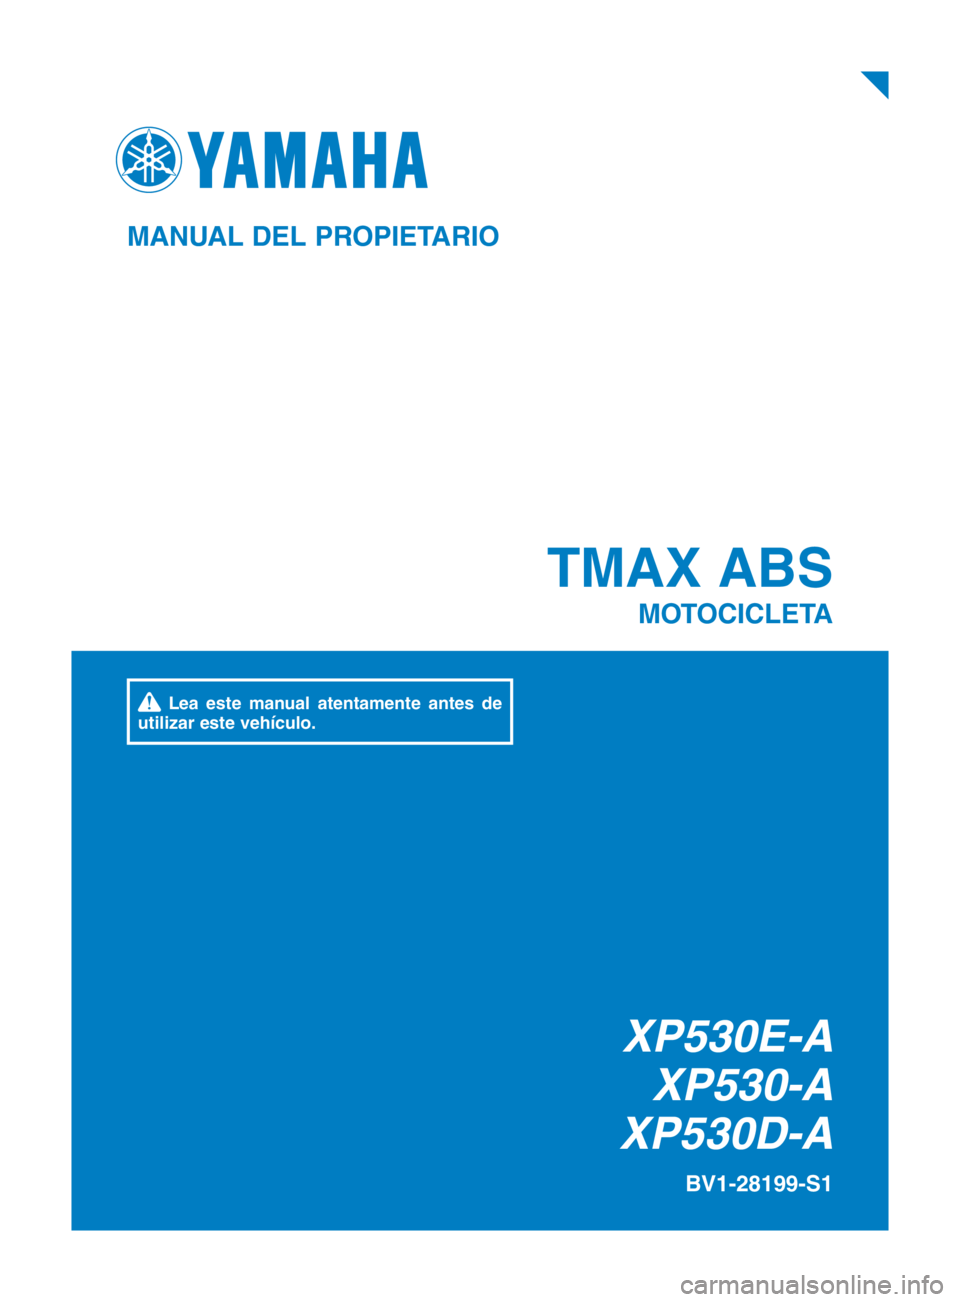 YAMAHA TMAX 2018  Manuale de Empleo (in Spanish) 